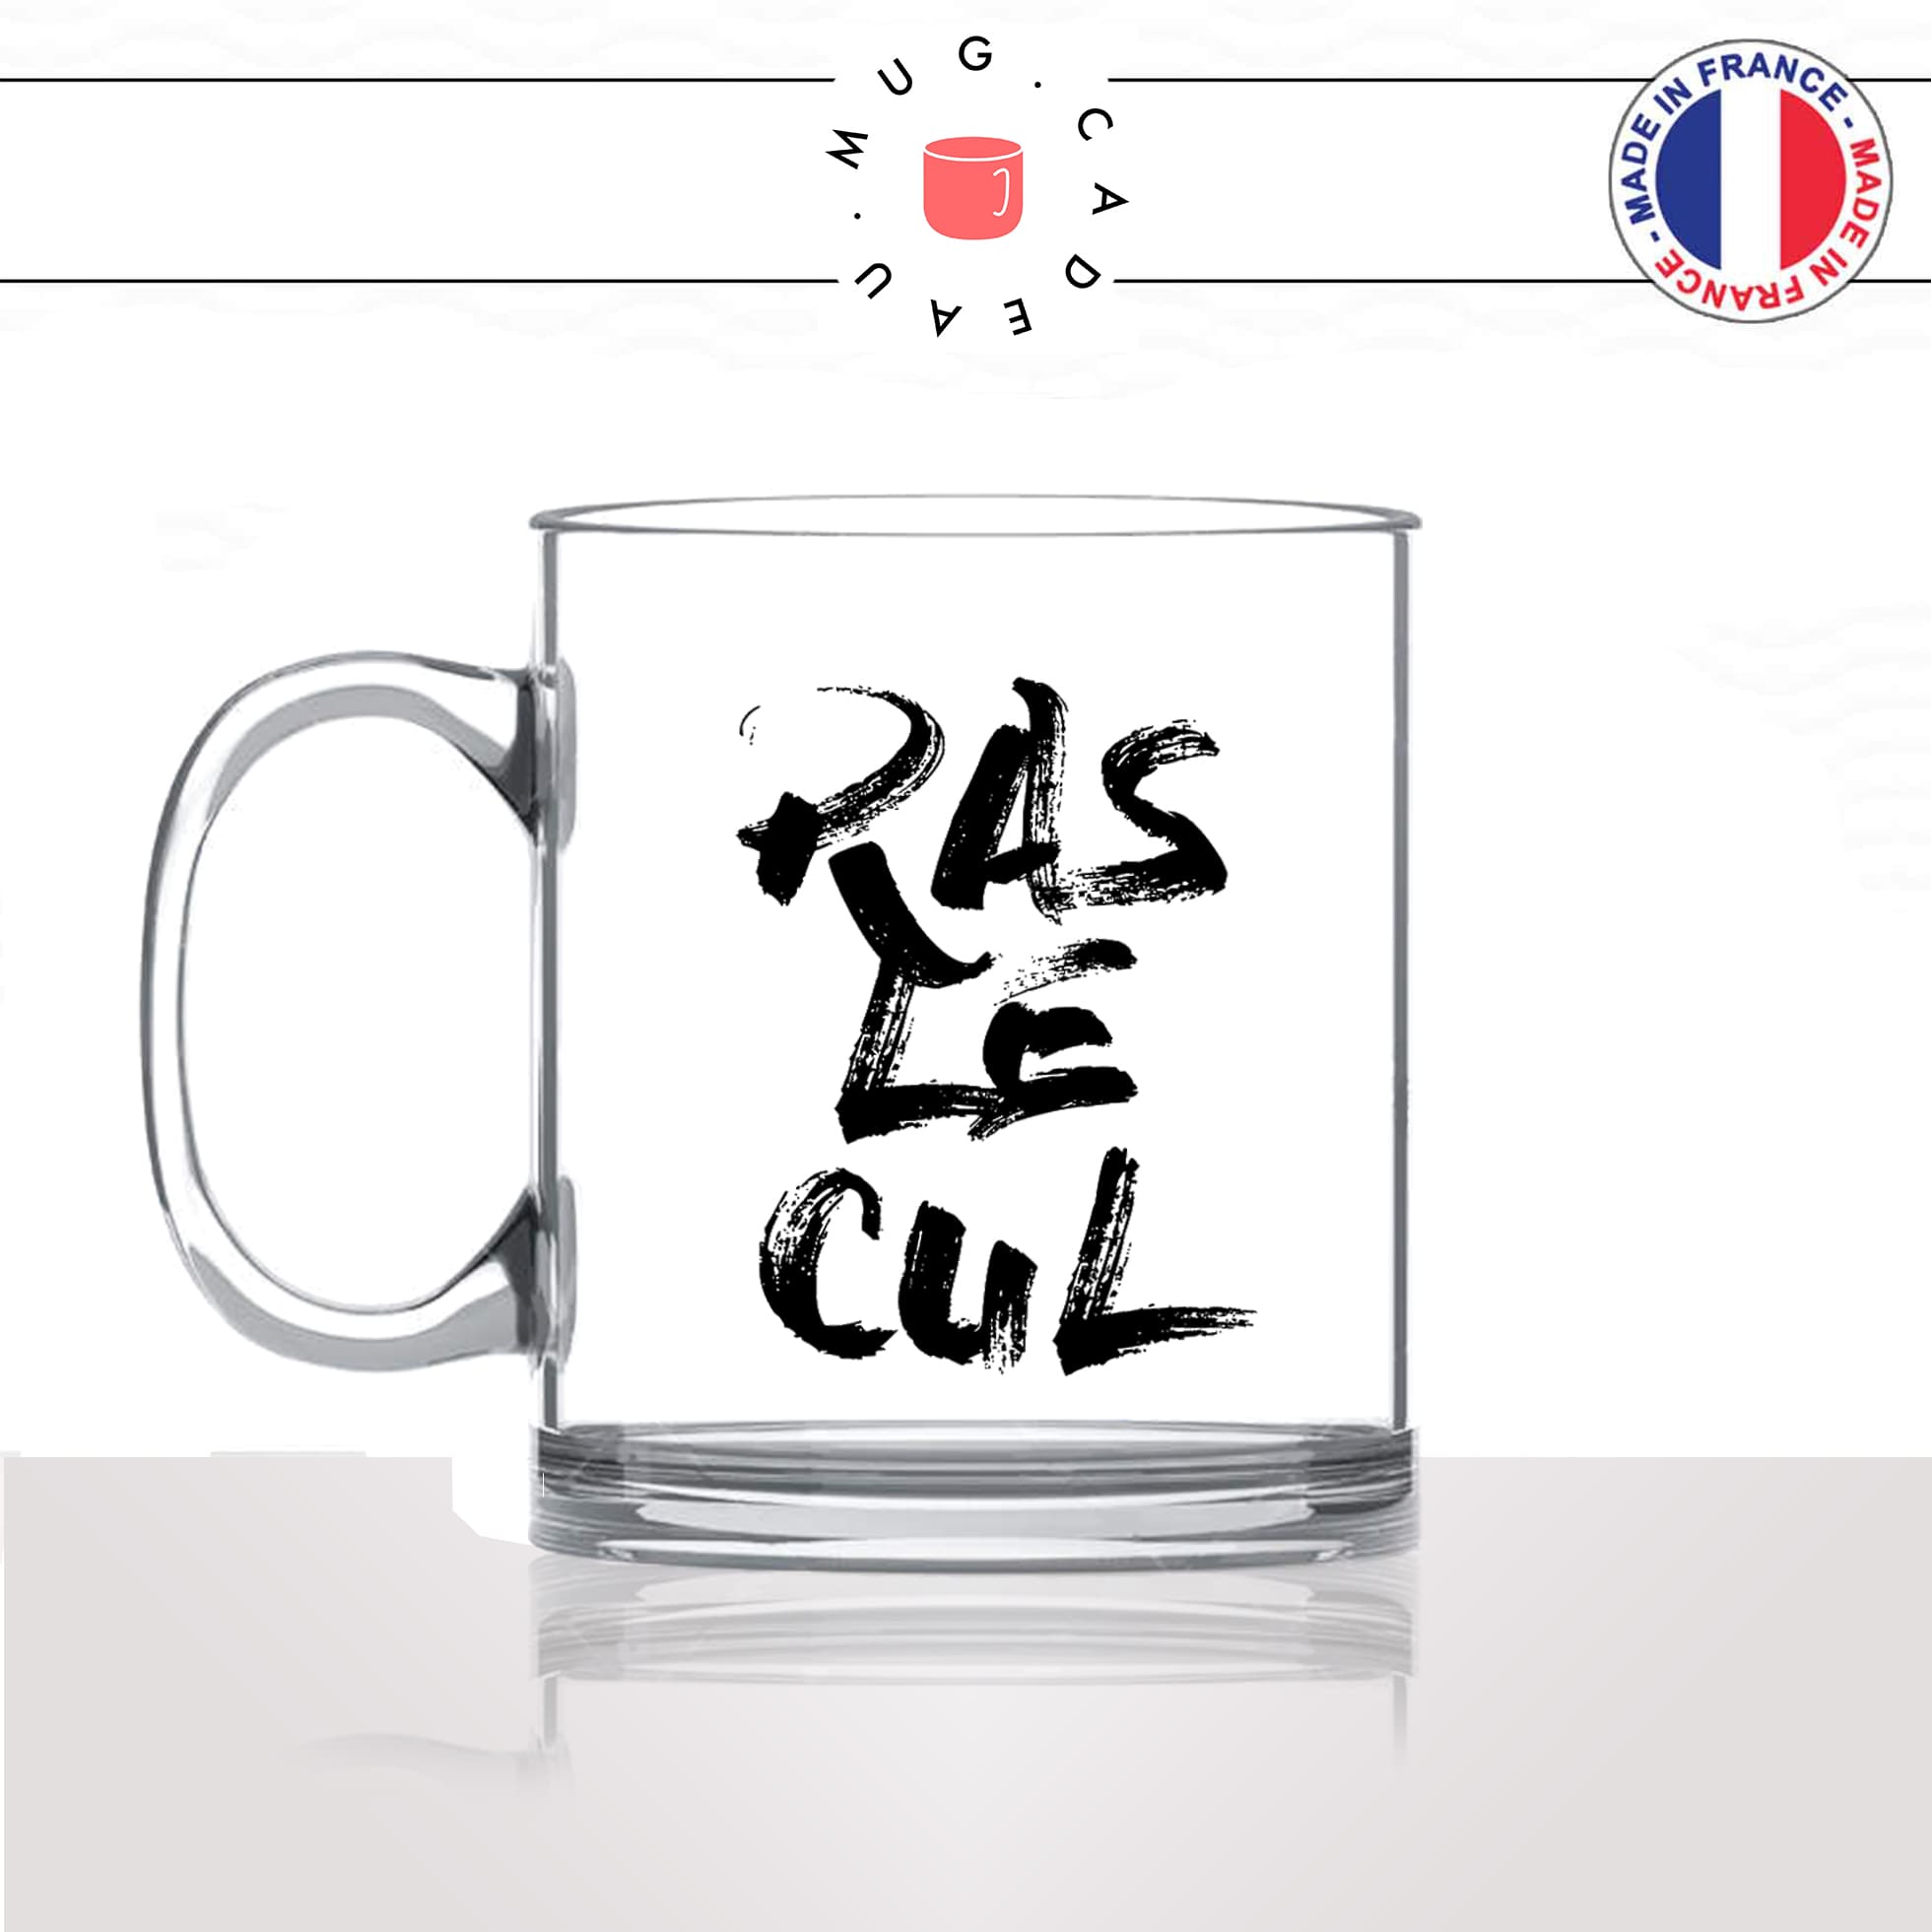 mug-tasse-en-verre-transparent-glass-ras-le-cul-jen-ai-marre-expression-phrase-fransaice-humour-fun-idée-cadeau-originale-cool